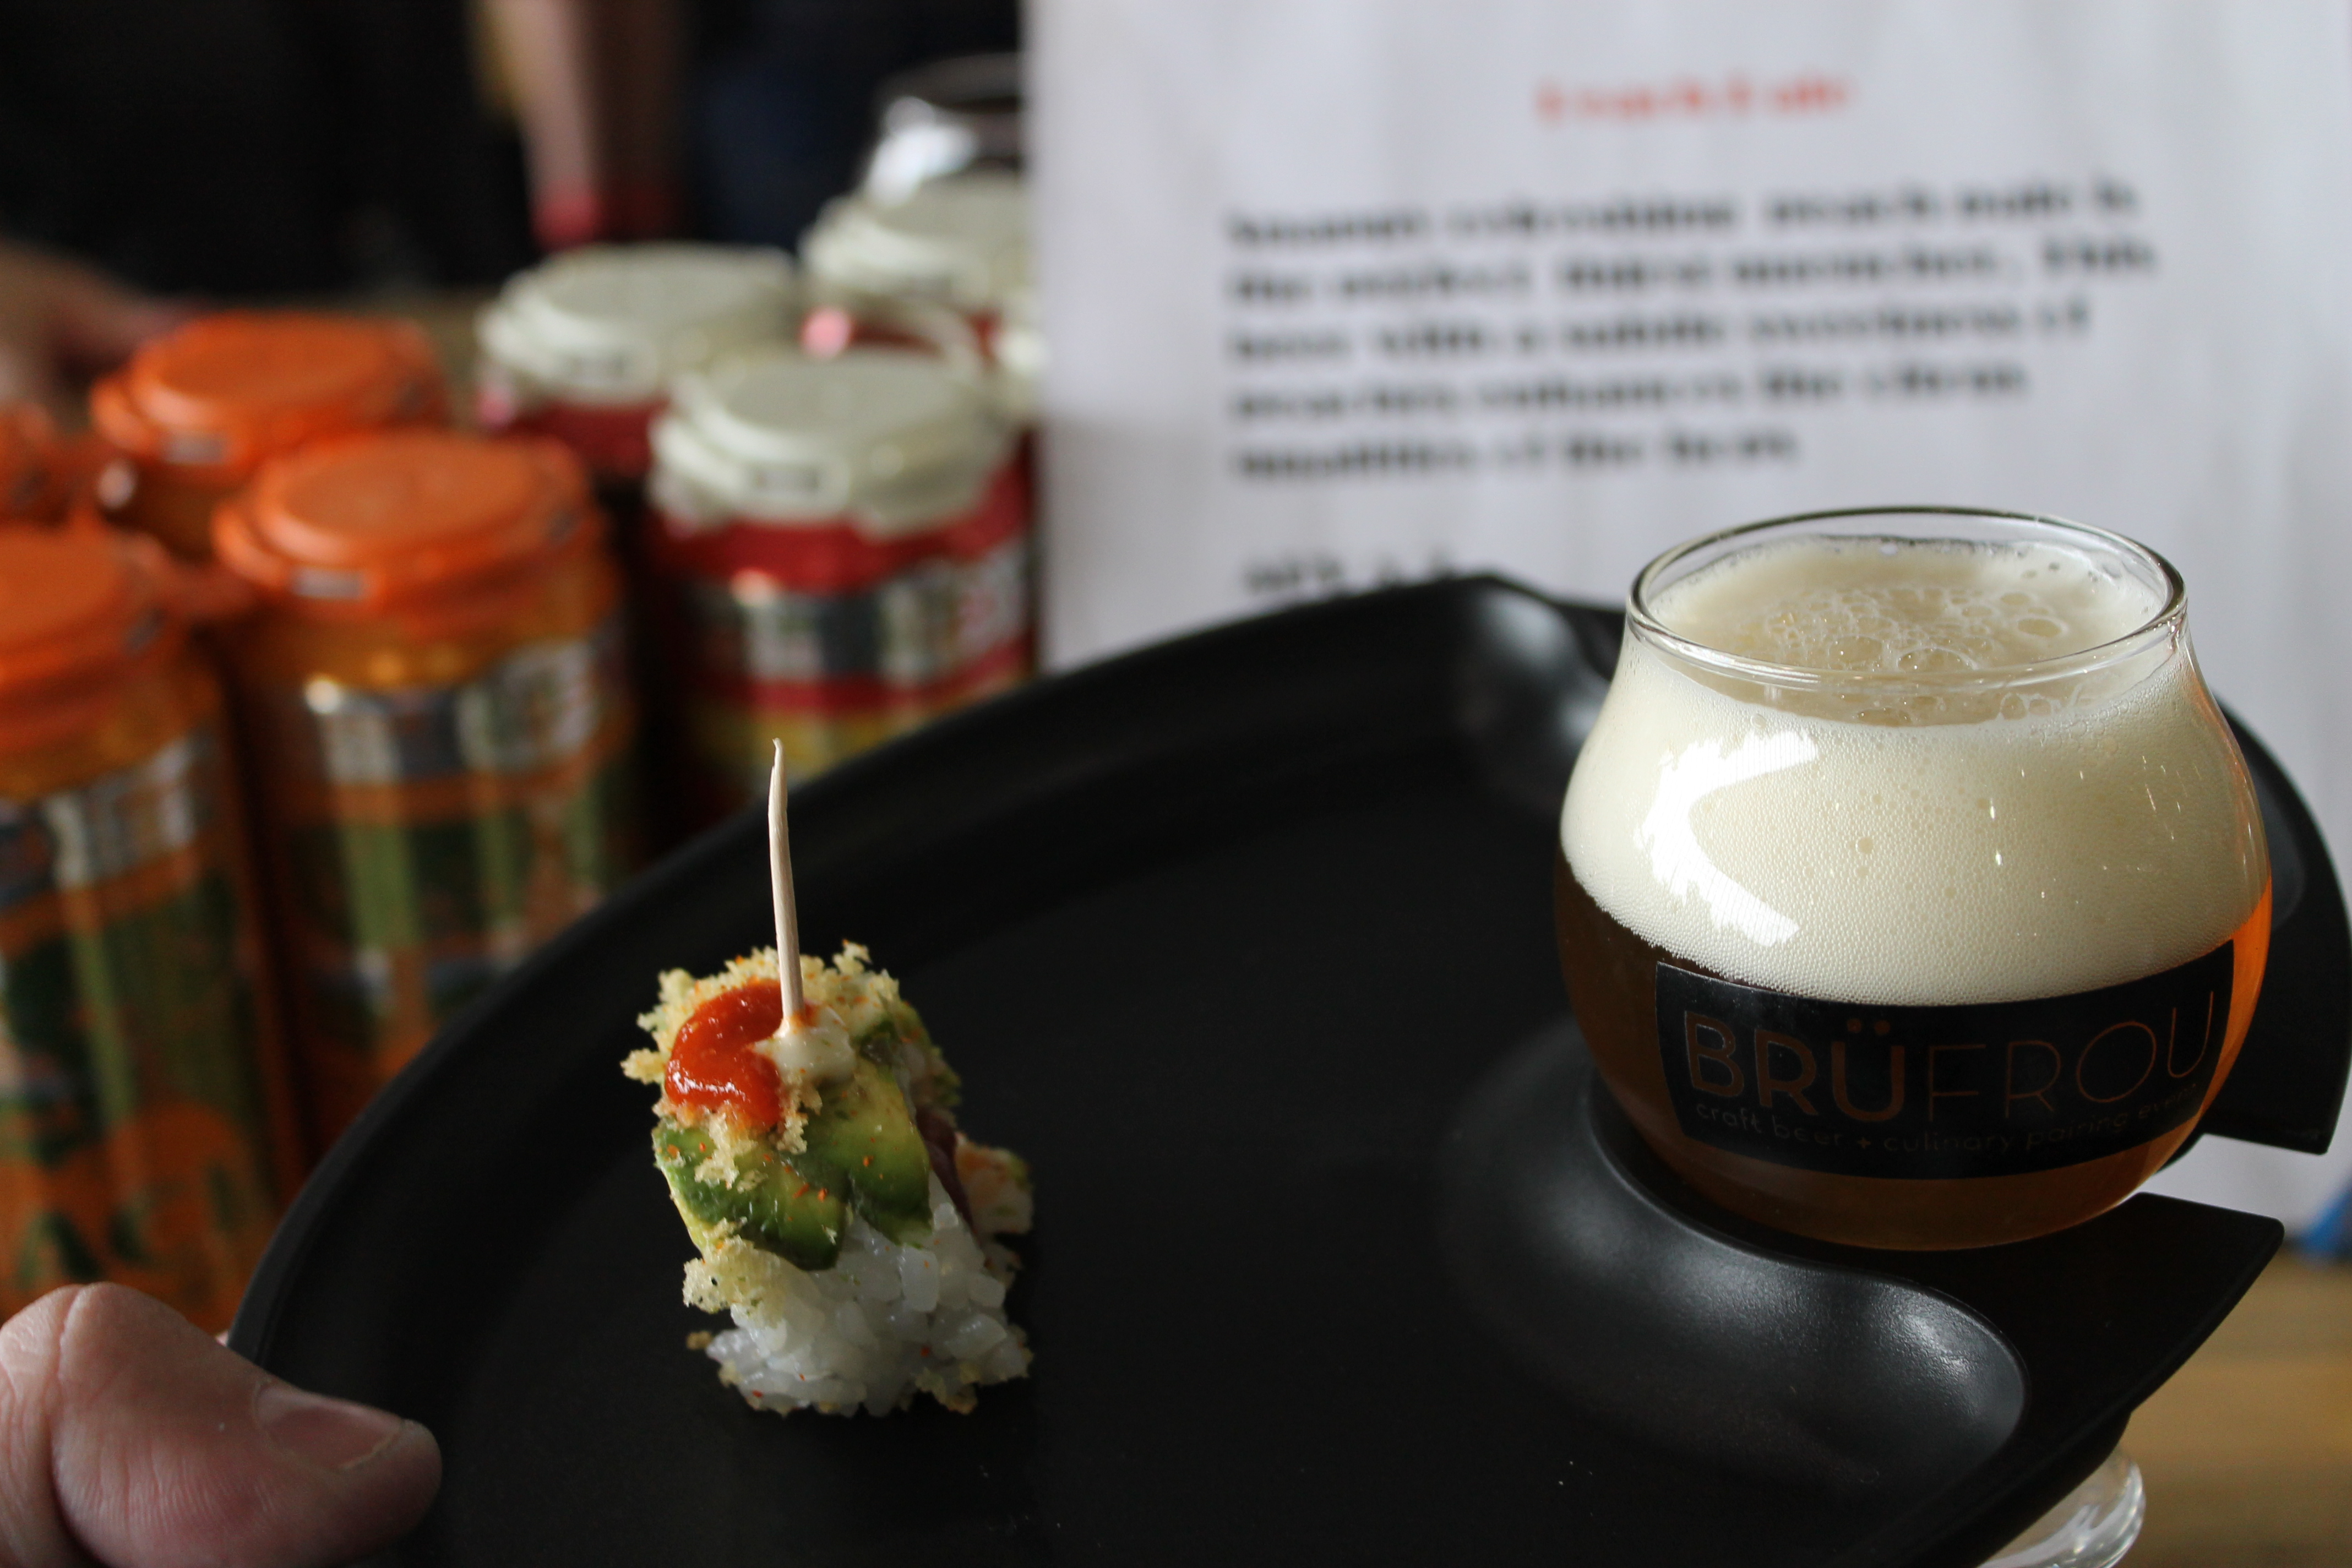 BruFrou Craft Beer + Culinary Pairing Event | A Recap